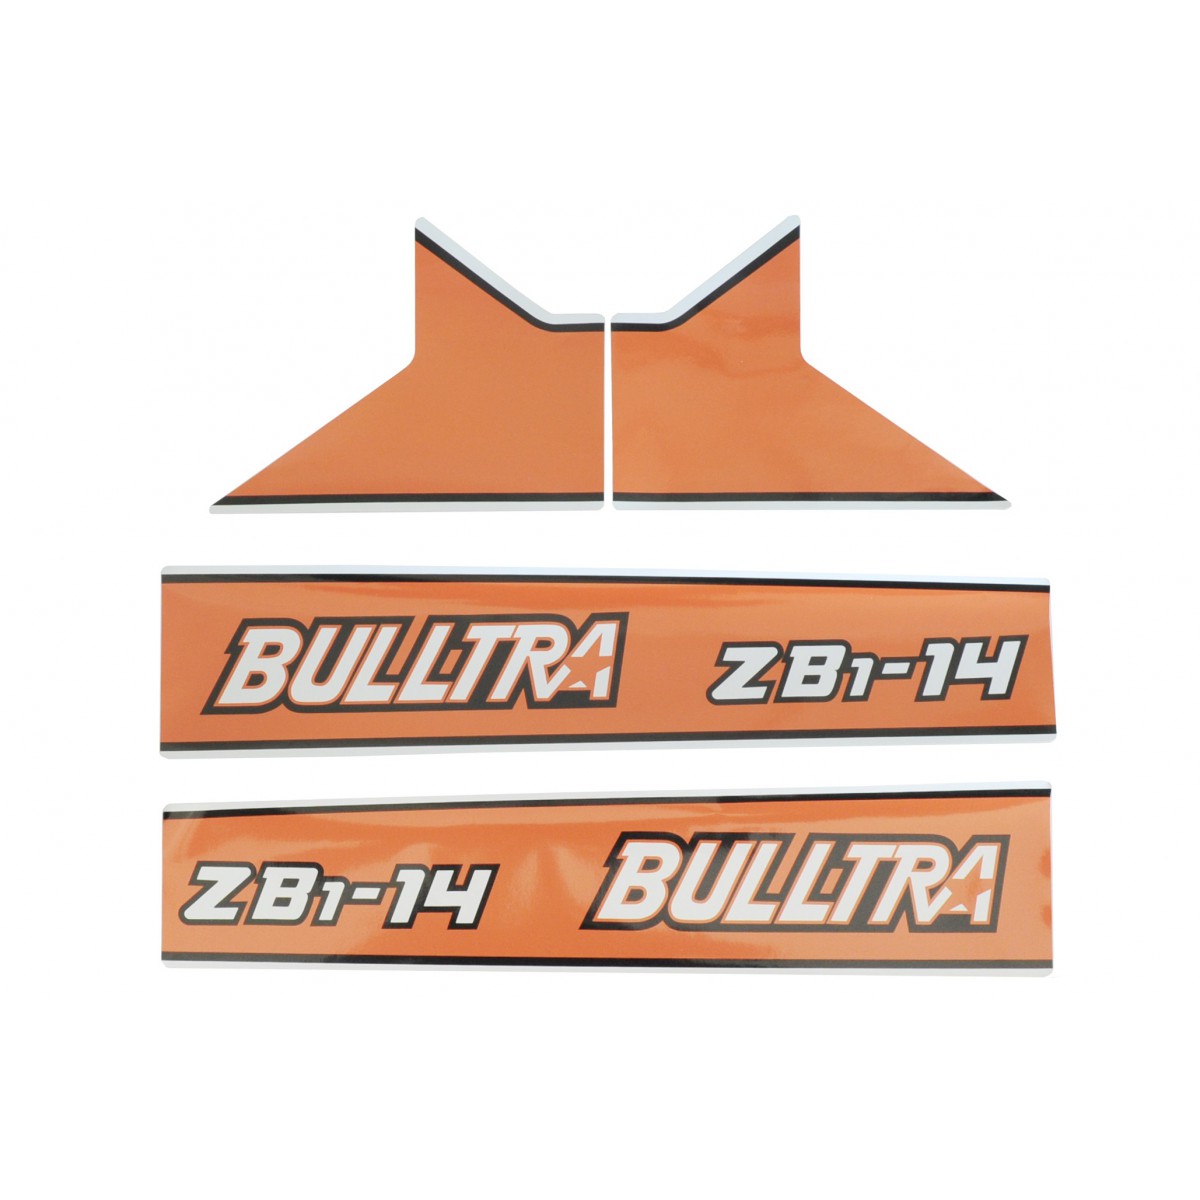 Autocollants Kubota Bulltra B1-14, ZB1-14